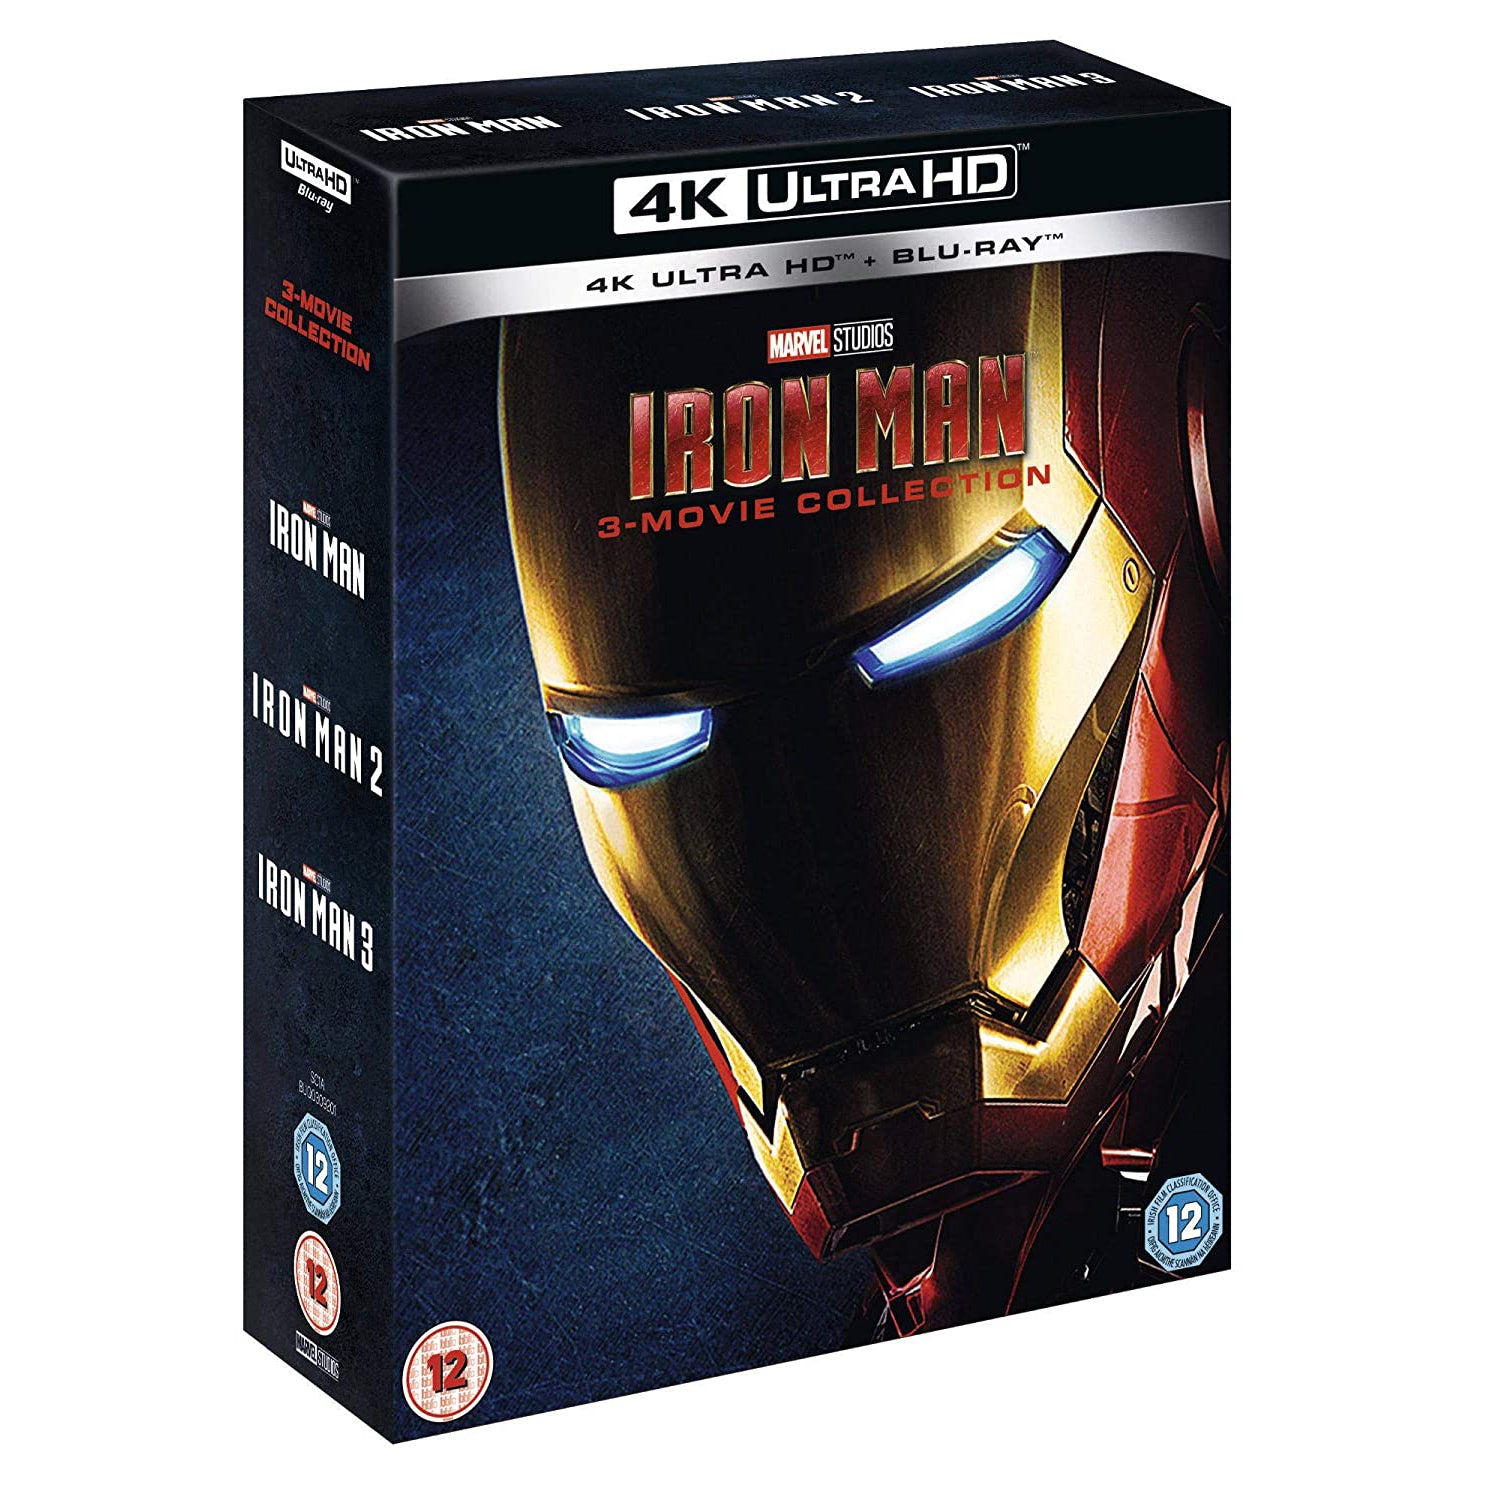 Studios　Man　Iron　4K　Ultra　HD　Collection　Marvel　Blu-Ray　3-Movie　–